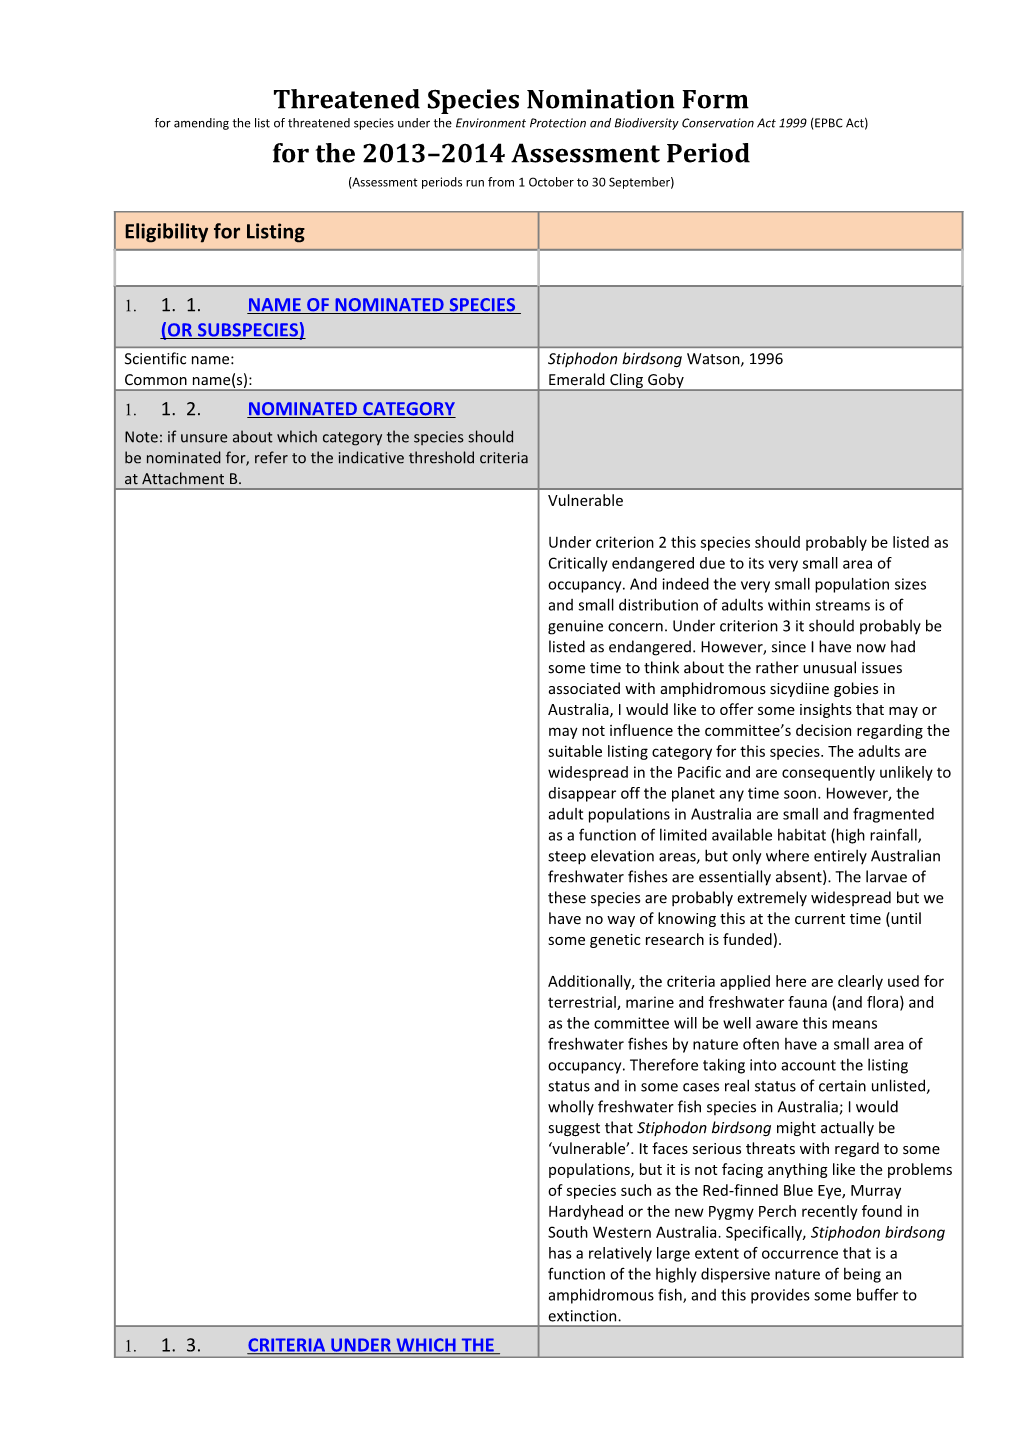 Threatened Species Nomination Form 2013 2014 (EPBC Act) - Stiphodon Birdsong